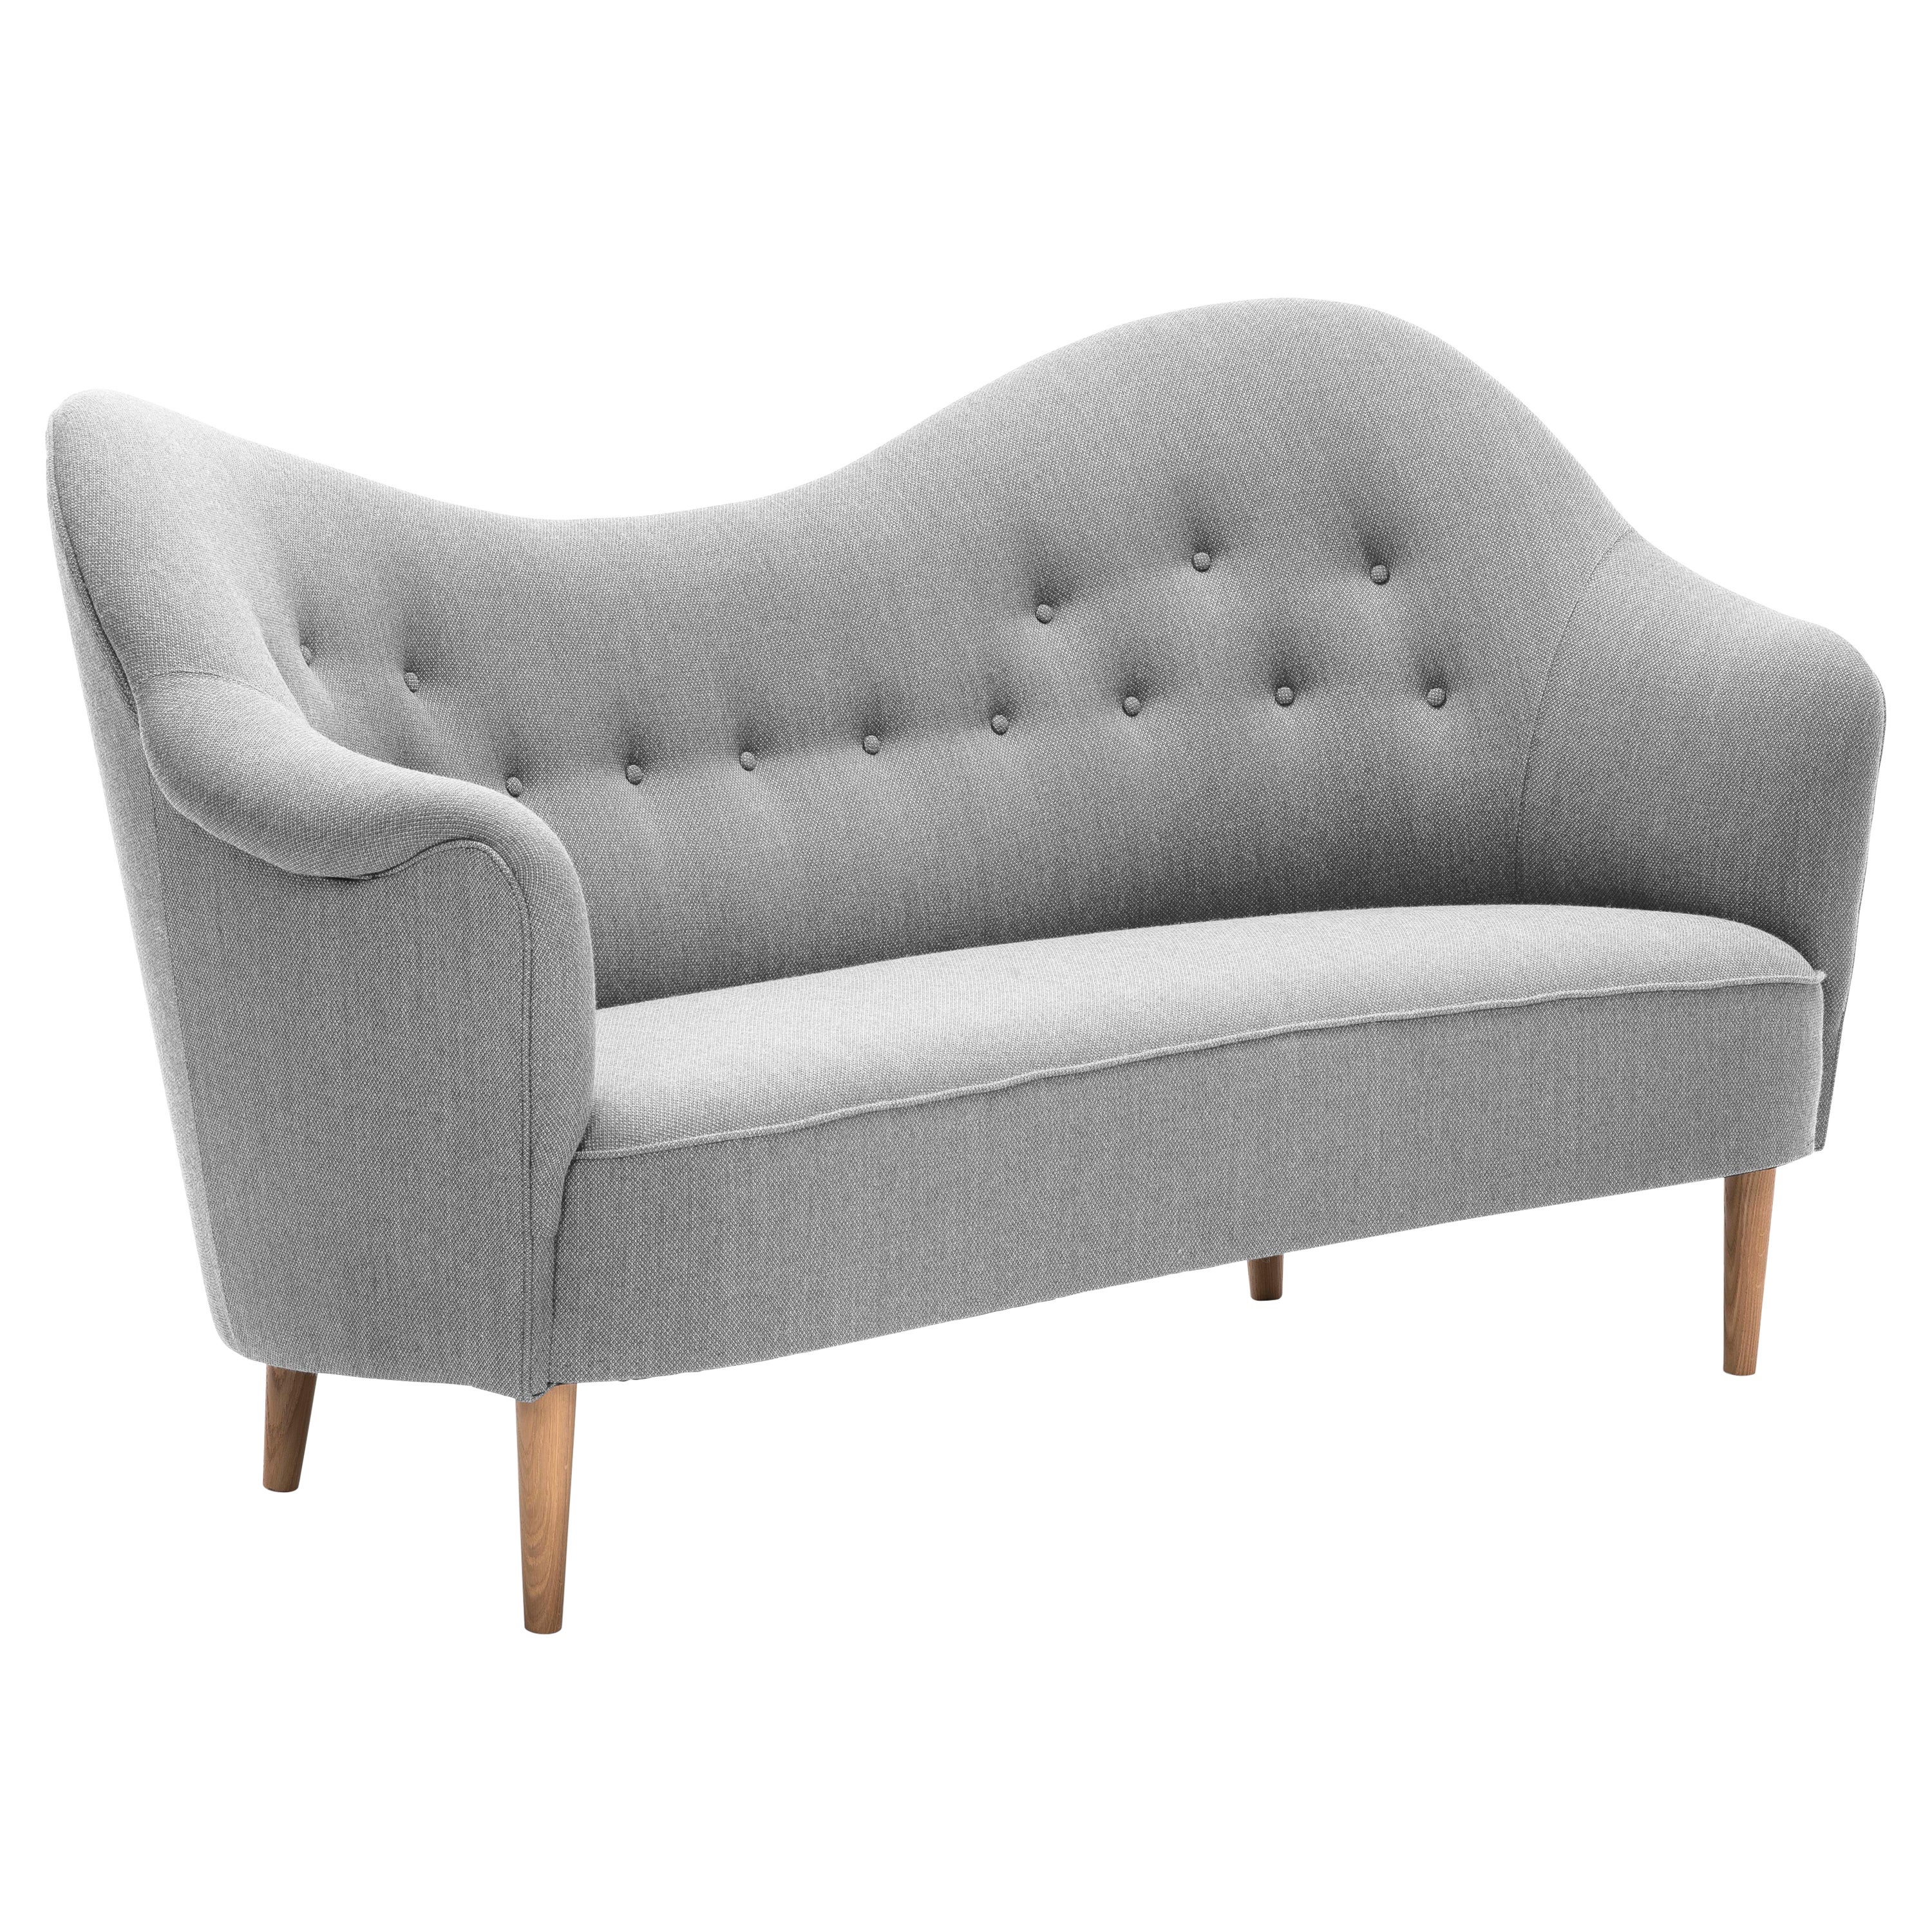 Carl Malmsten Samspel Sofa, Newly Produced, Designed in 1956